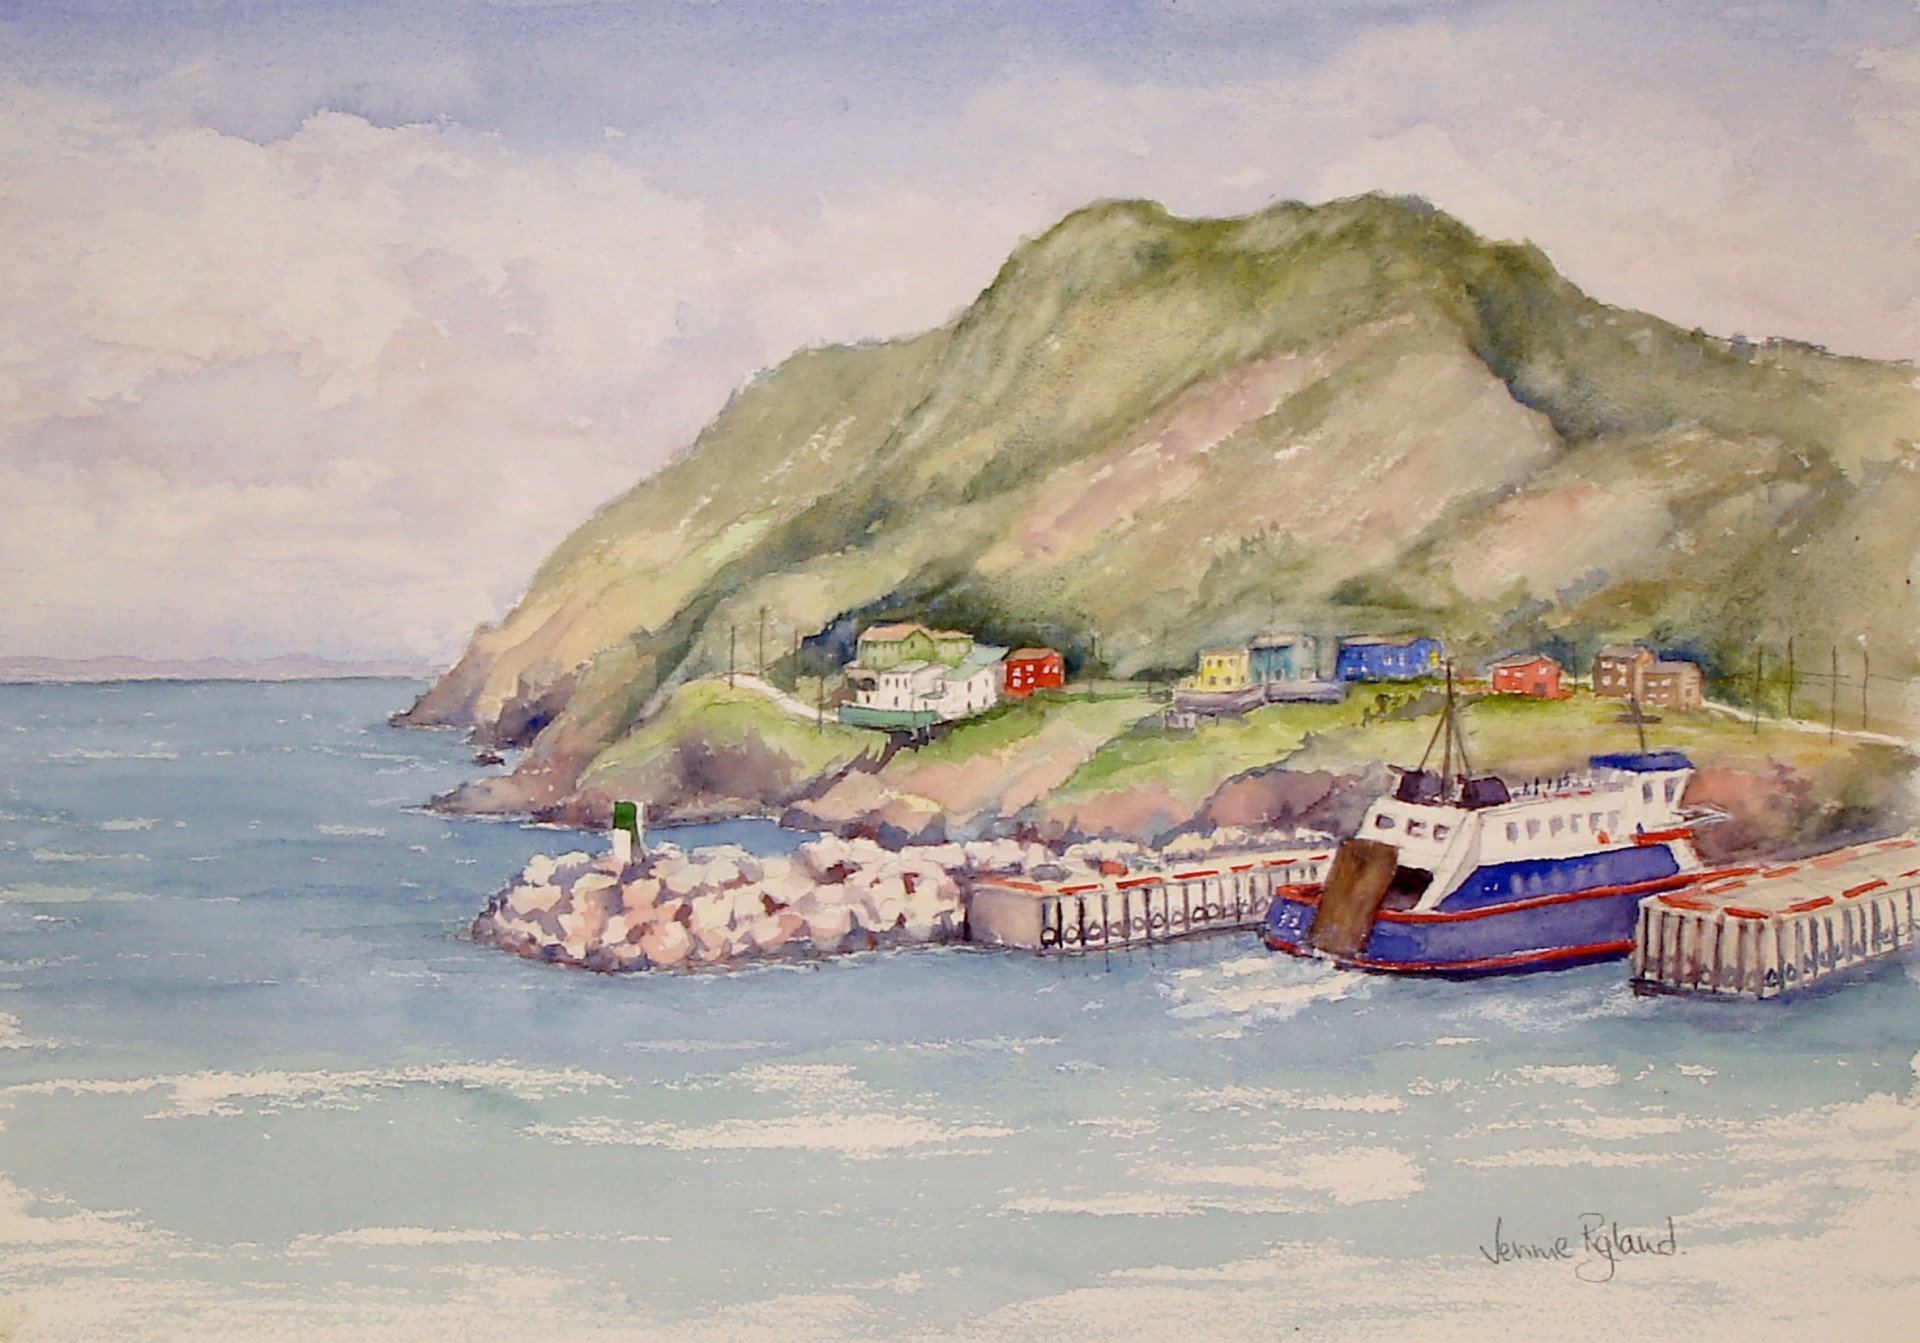 "All Aboard for Bell Island" Newfoundland by Jennie Ryland